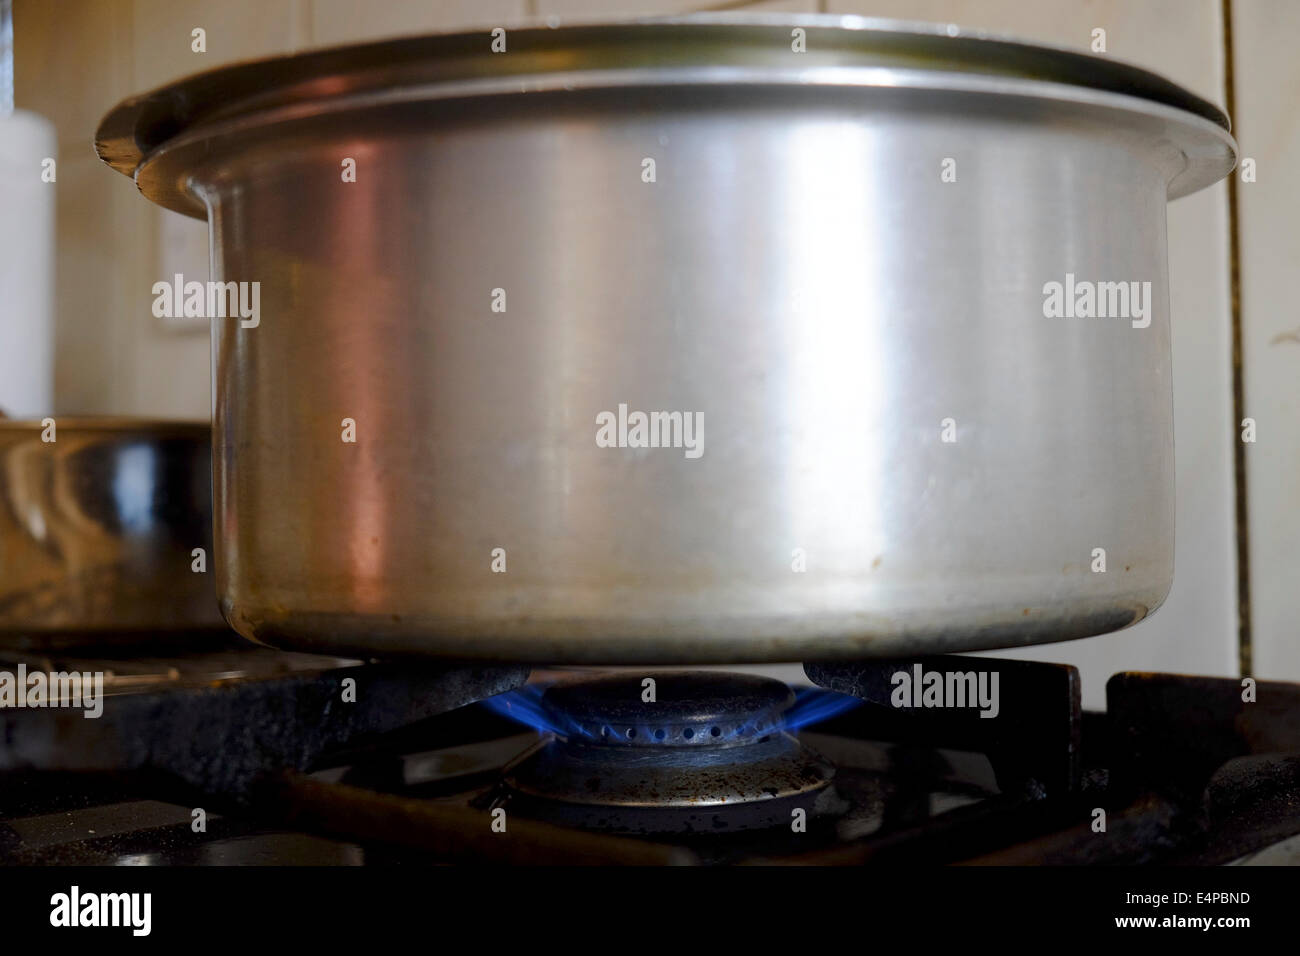 https://c8.alamy.com/comp/E4PBND/large-cooking-pot-on-a-burning-gas-cooker-E4PBND.jpg